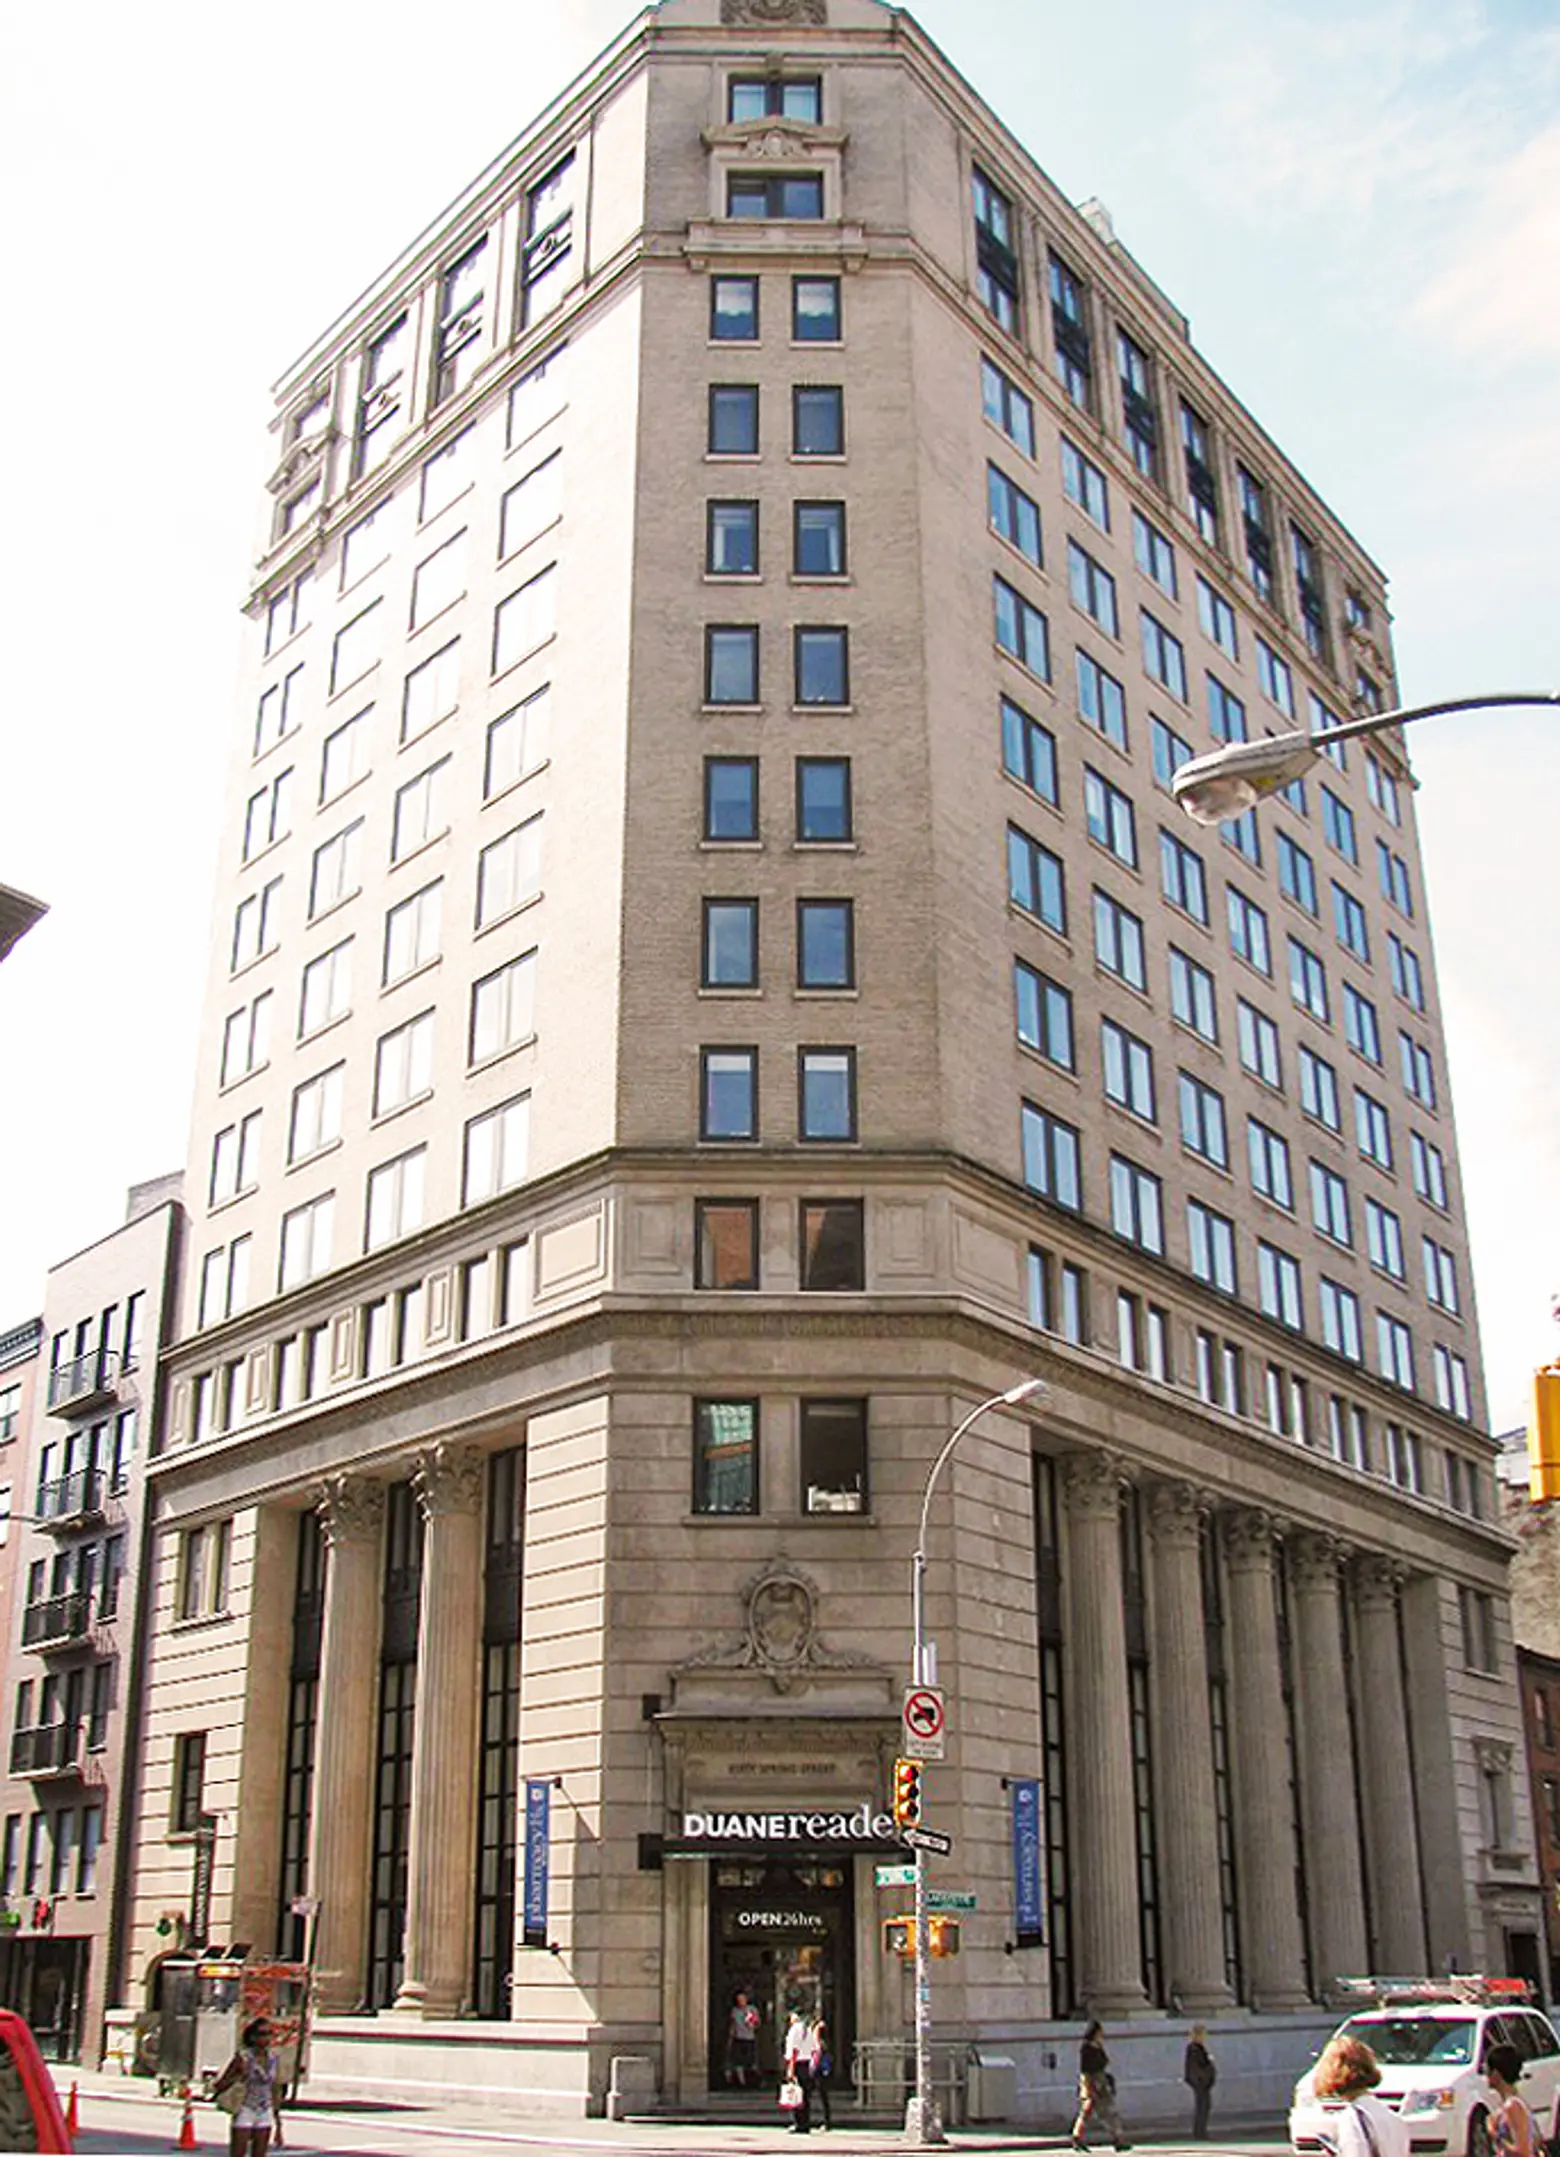 The East River Savings Bank, now a Duane Reade.